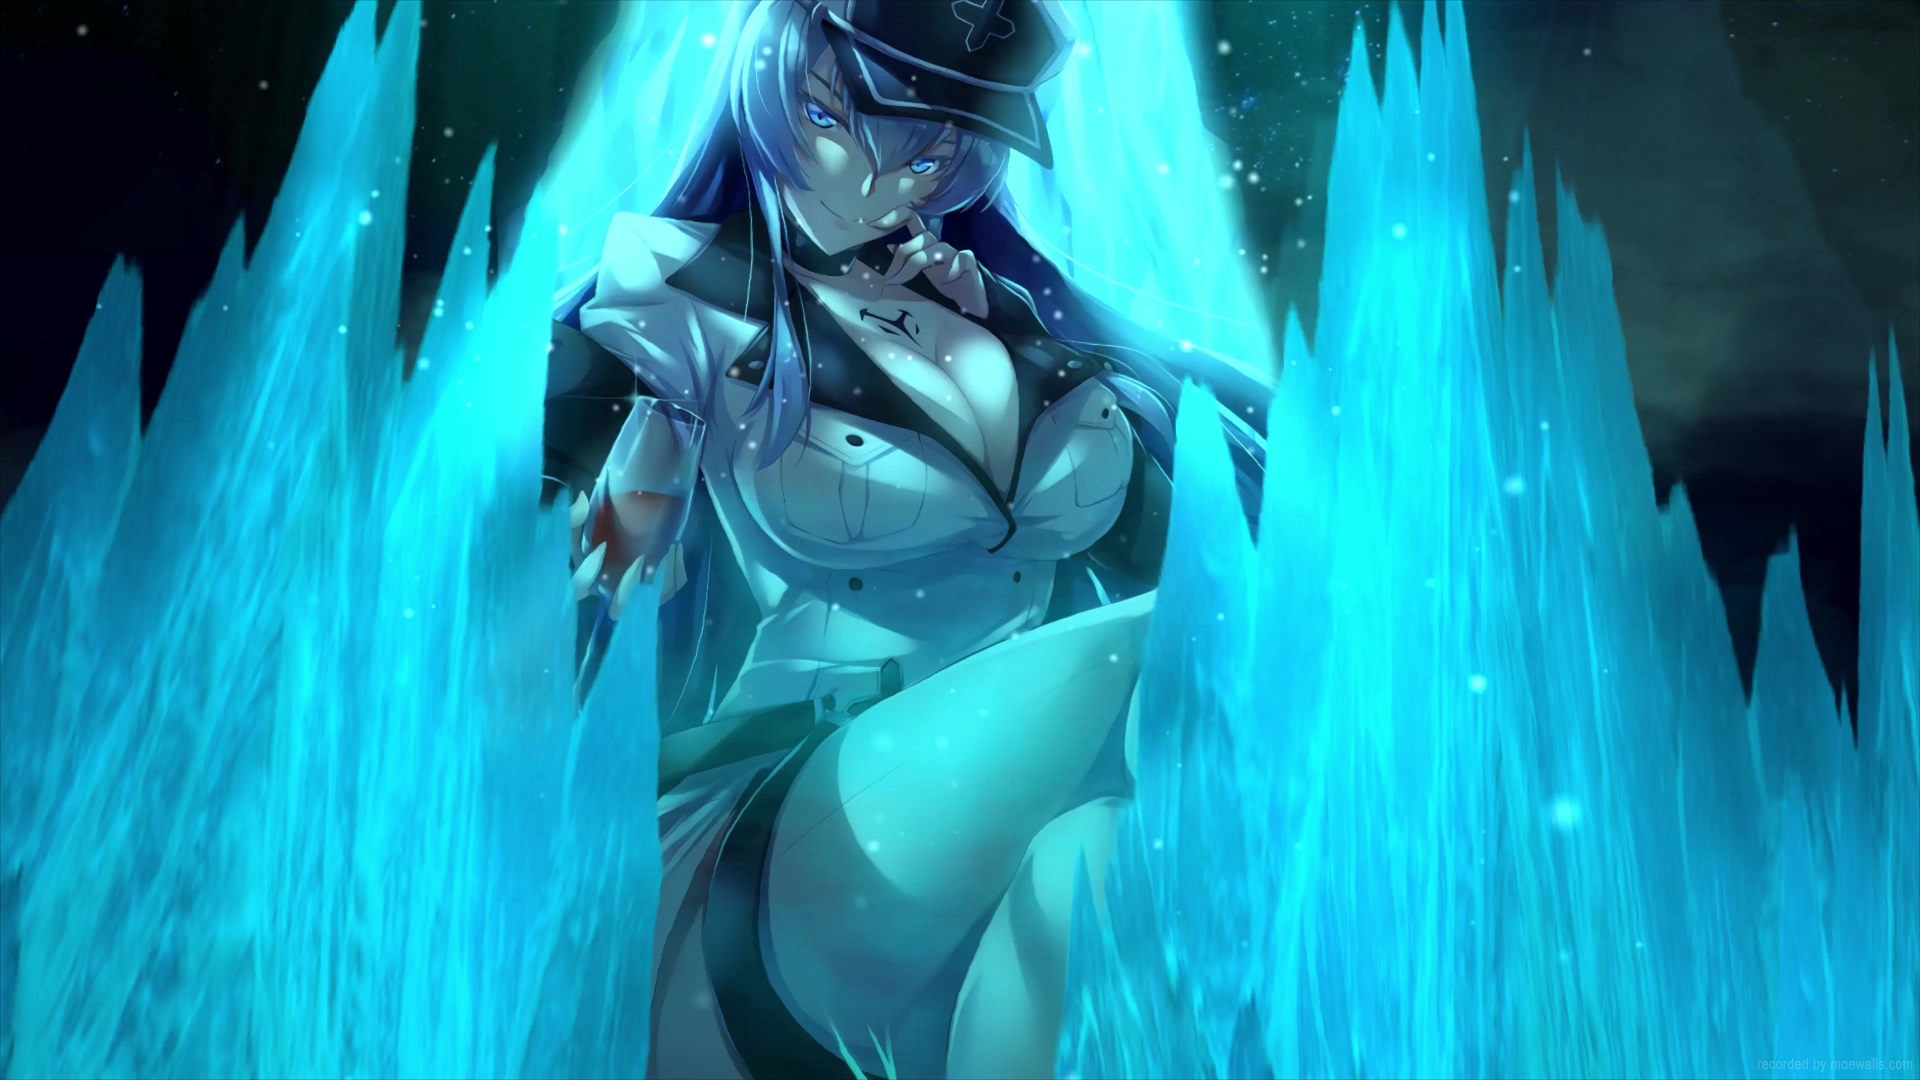 Esdeath Ice Queen Anime Akame Ga Kill Wallpaper, Free Downl…